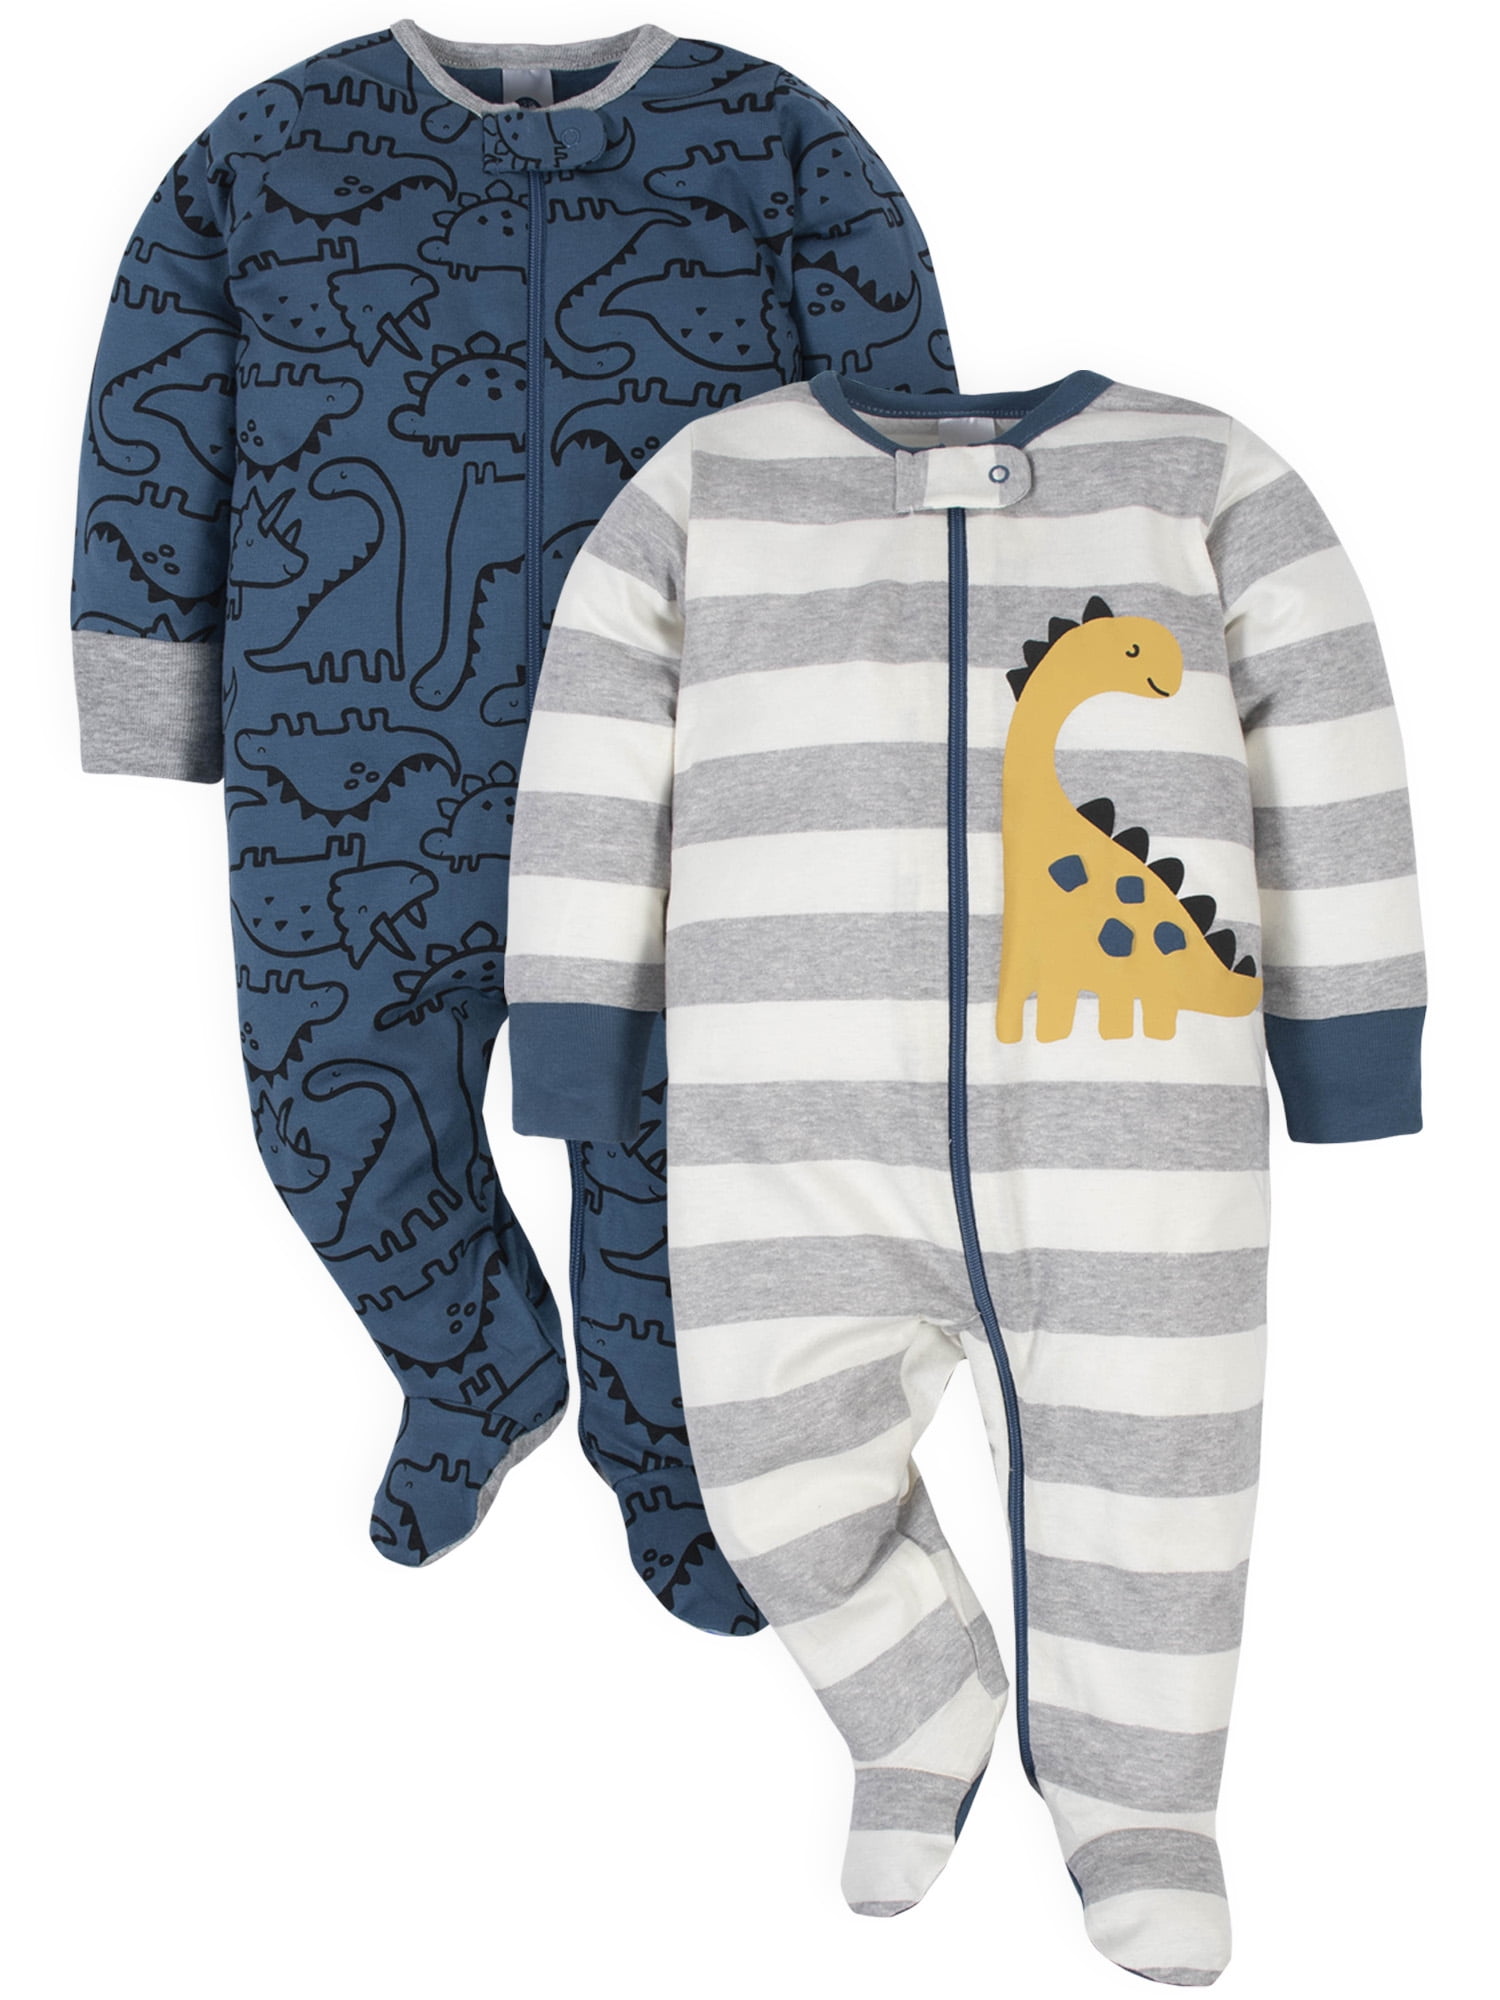 2-Pk Newborn Baby Footed Sleep Play Pajamas Sleeper Girl Boy Bodysuit Outfit New 